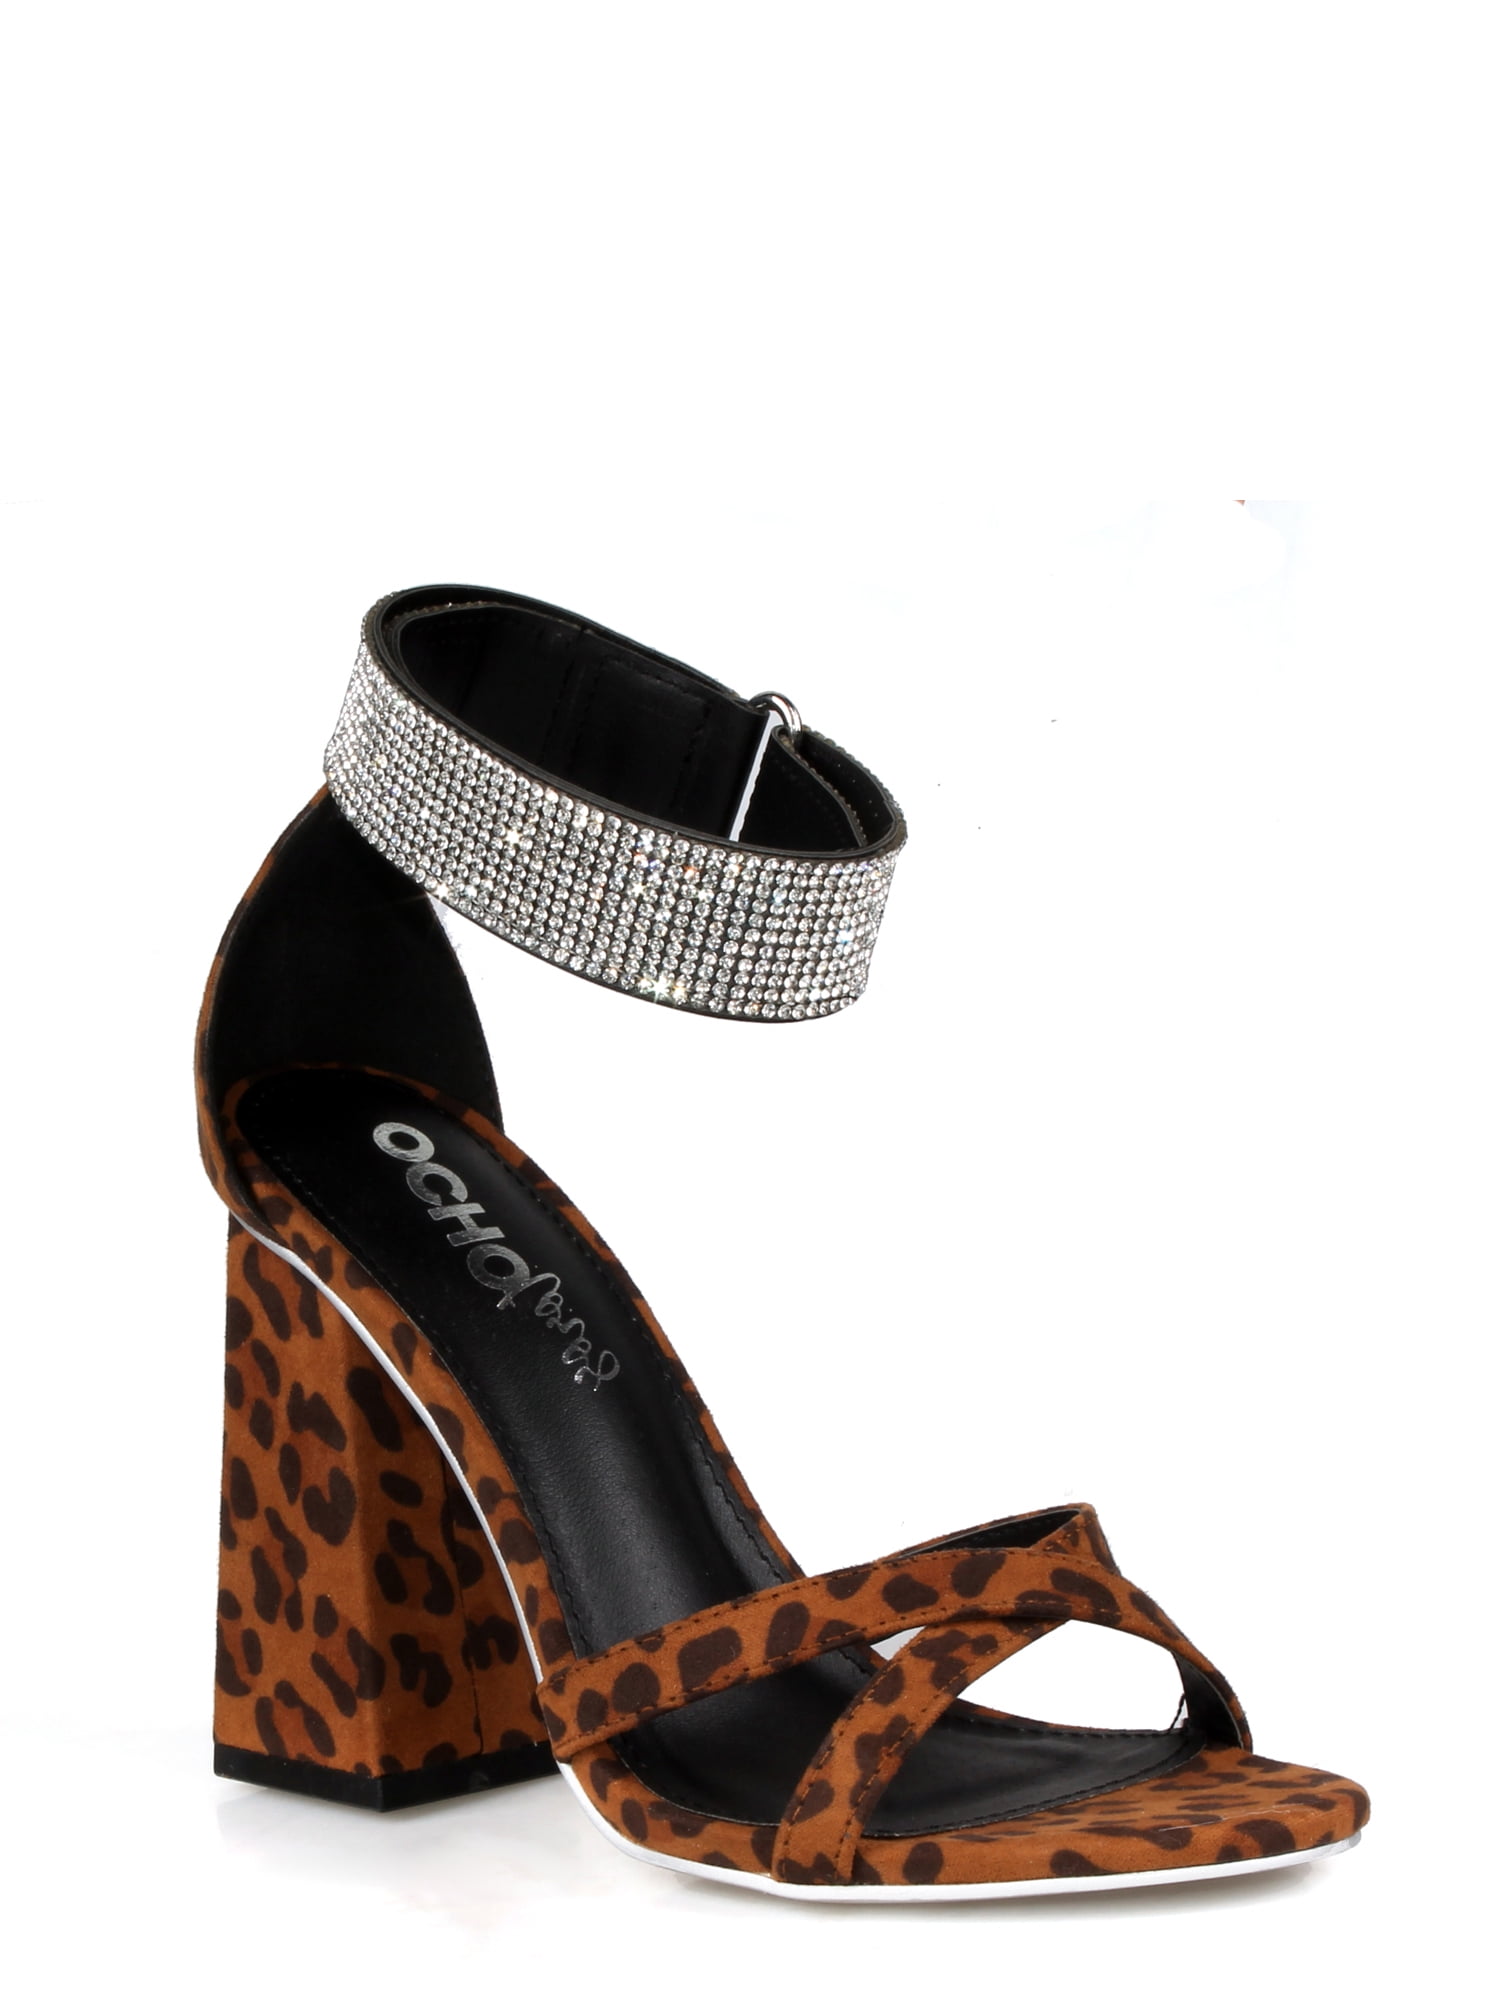 Dainzuy Womens Leopard Print Flip Flops Sandals Fashion Rhinestone Slip On Ankle Strap Block Heel Beach Slippers 